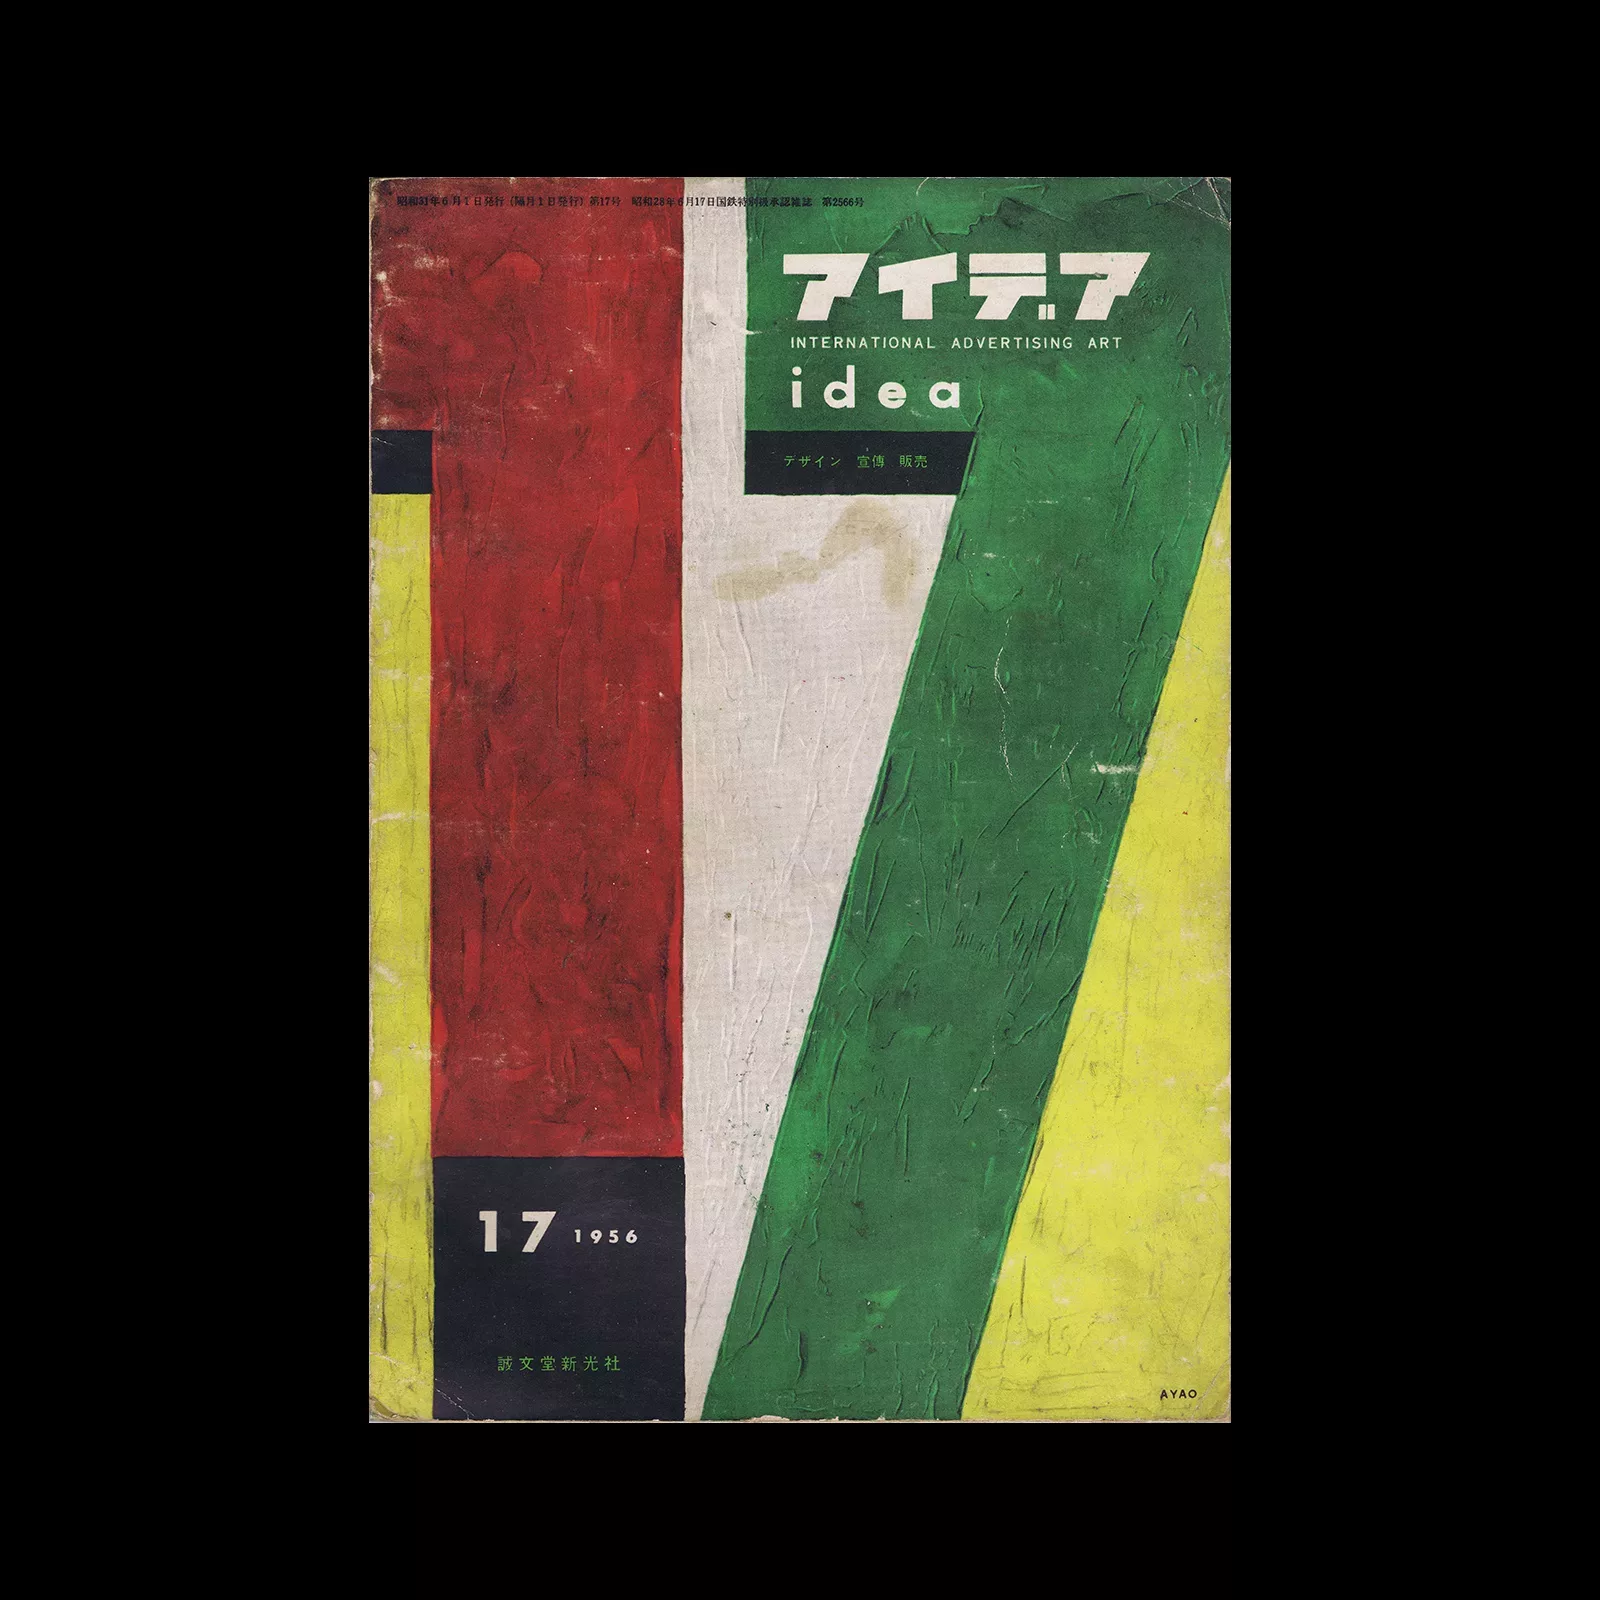 Idea 017, 1956. Cover design by Ayao Yamana